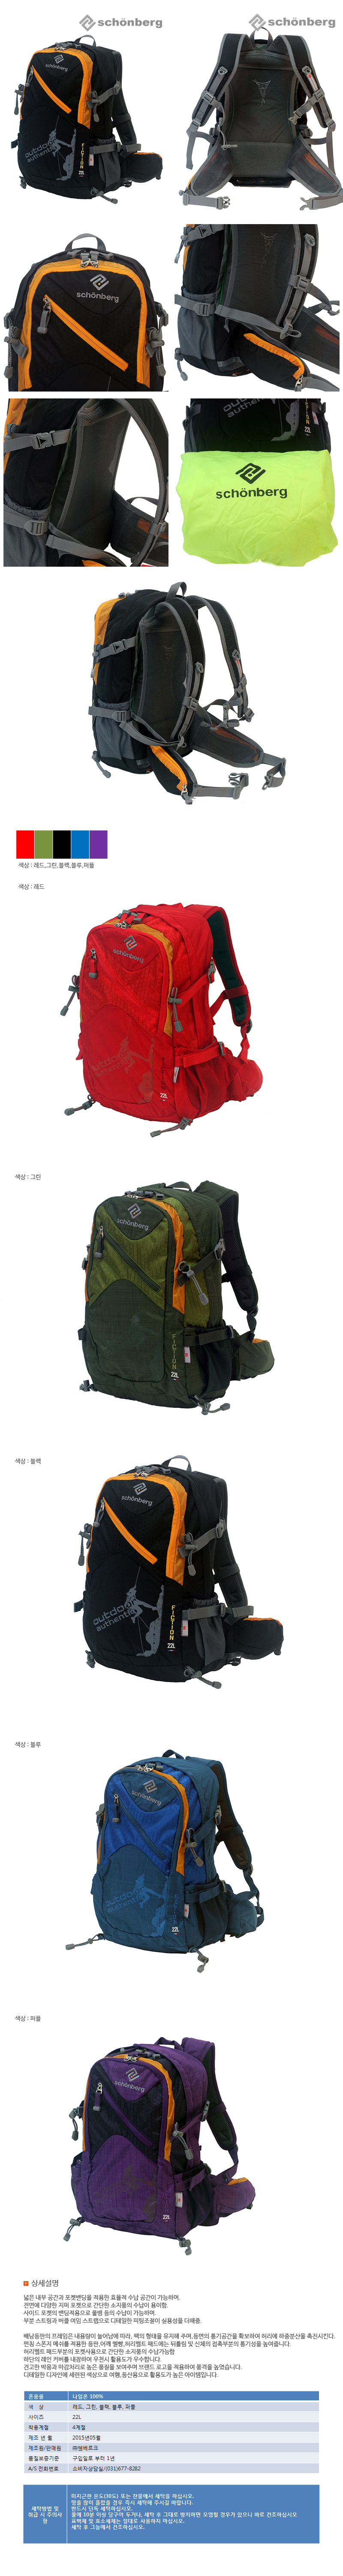 backpack_22l_view.jpg